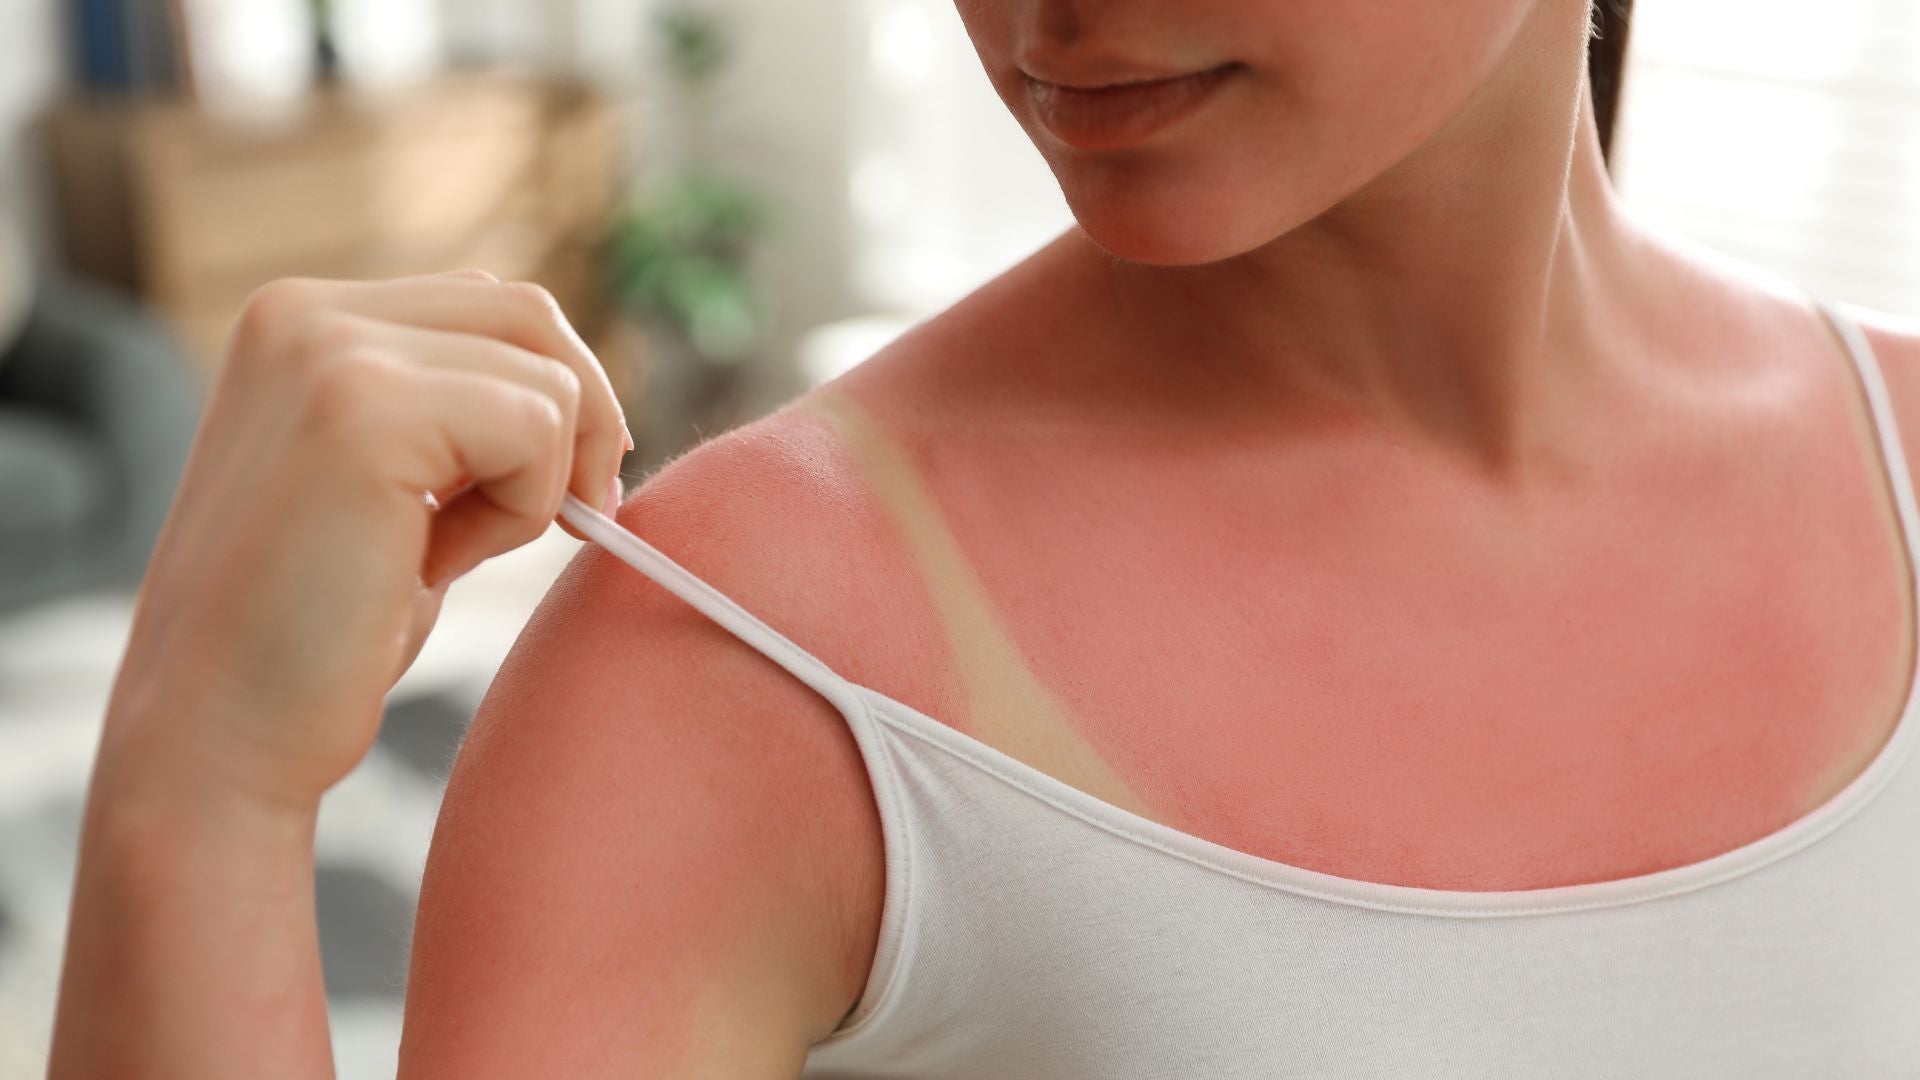 Woman lifts tank top strap to reveal bad sunburn